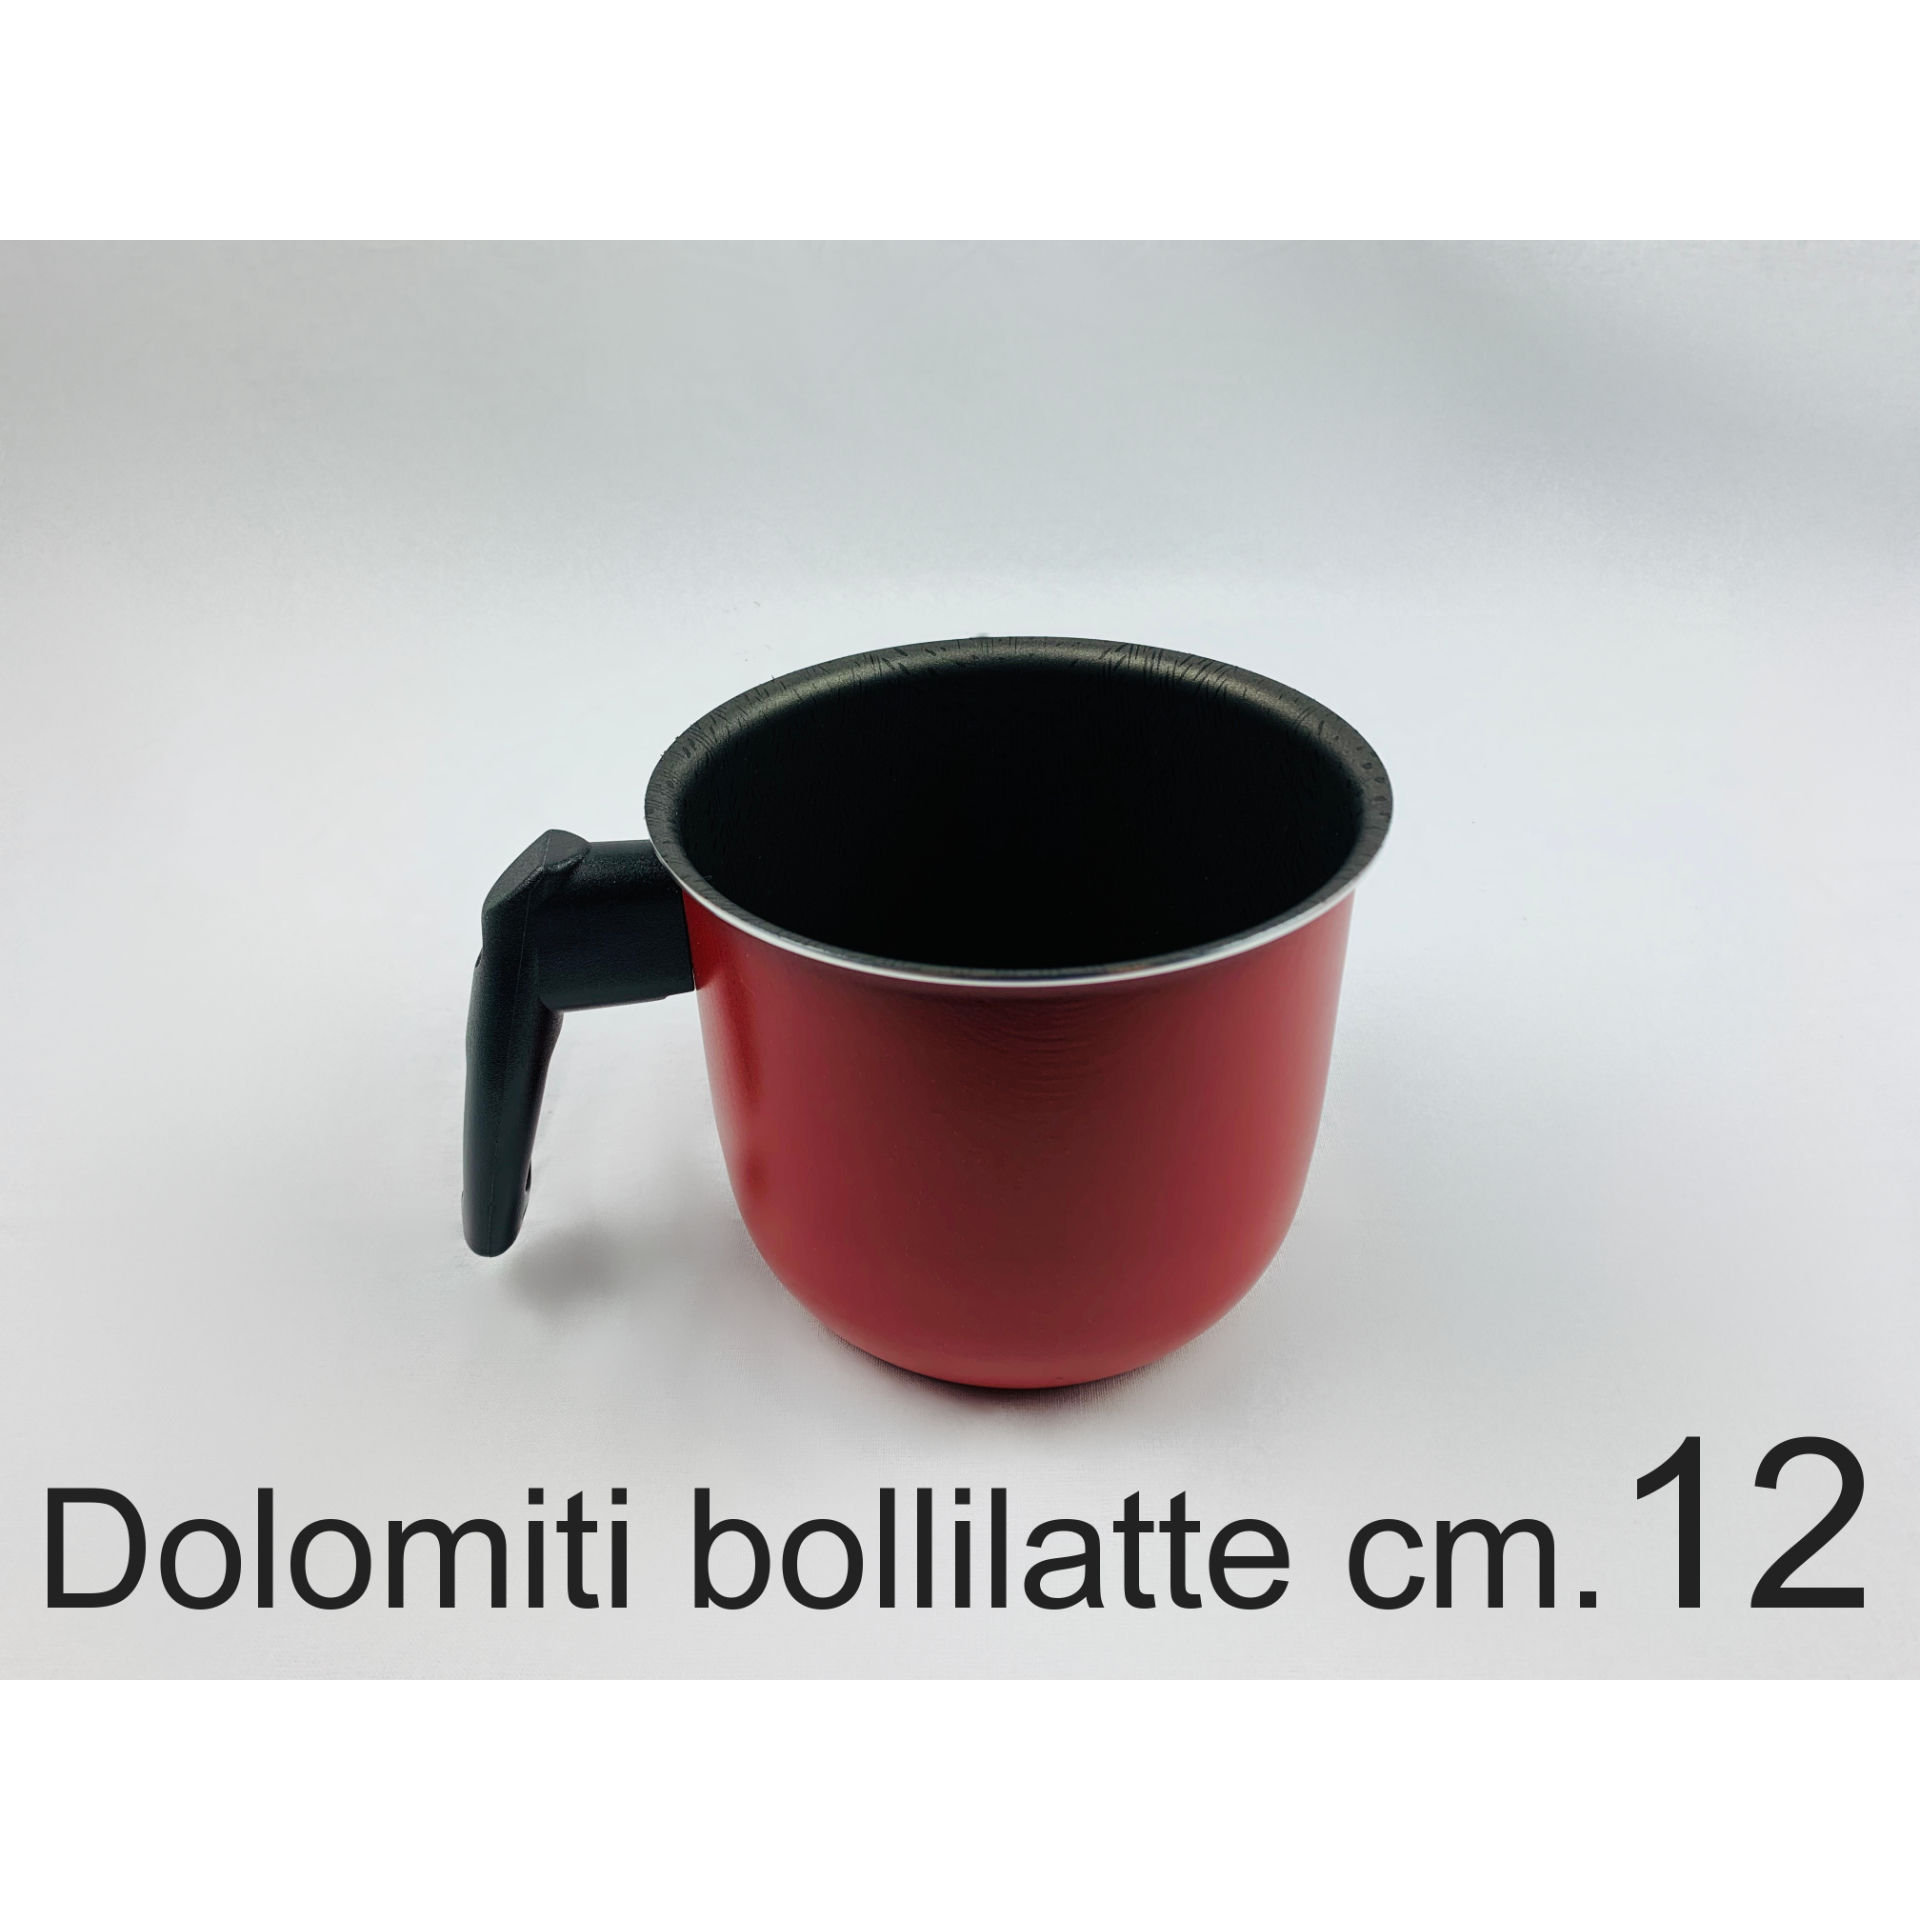 BOLLILATTE CM 12 DOLOMITI